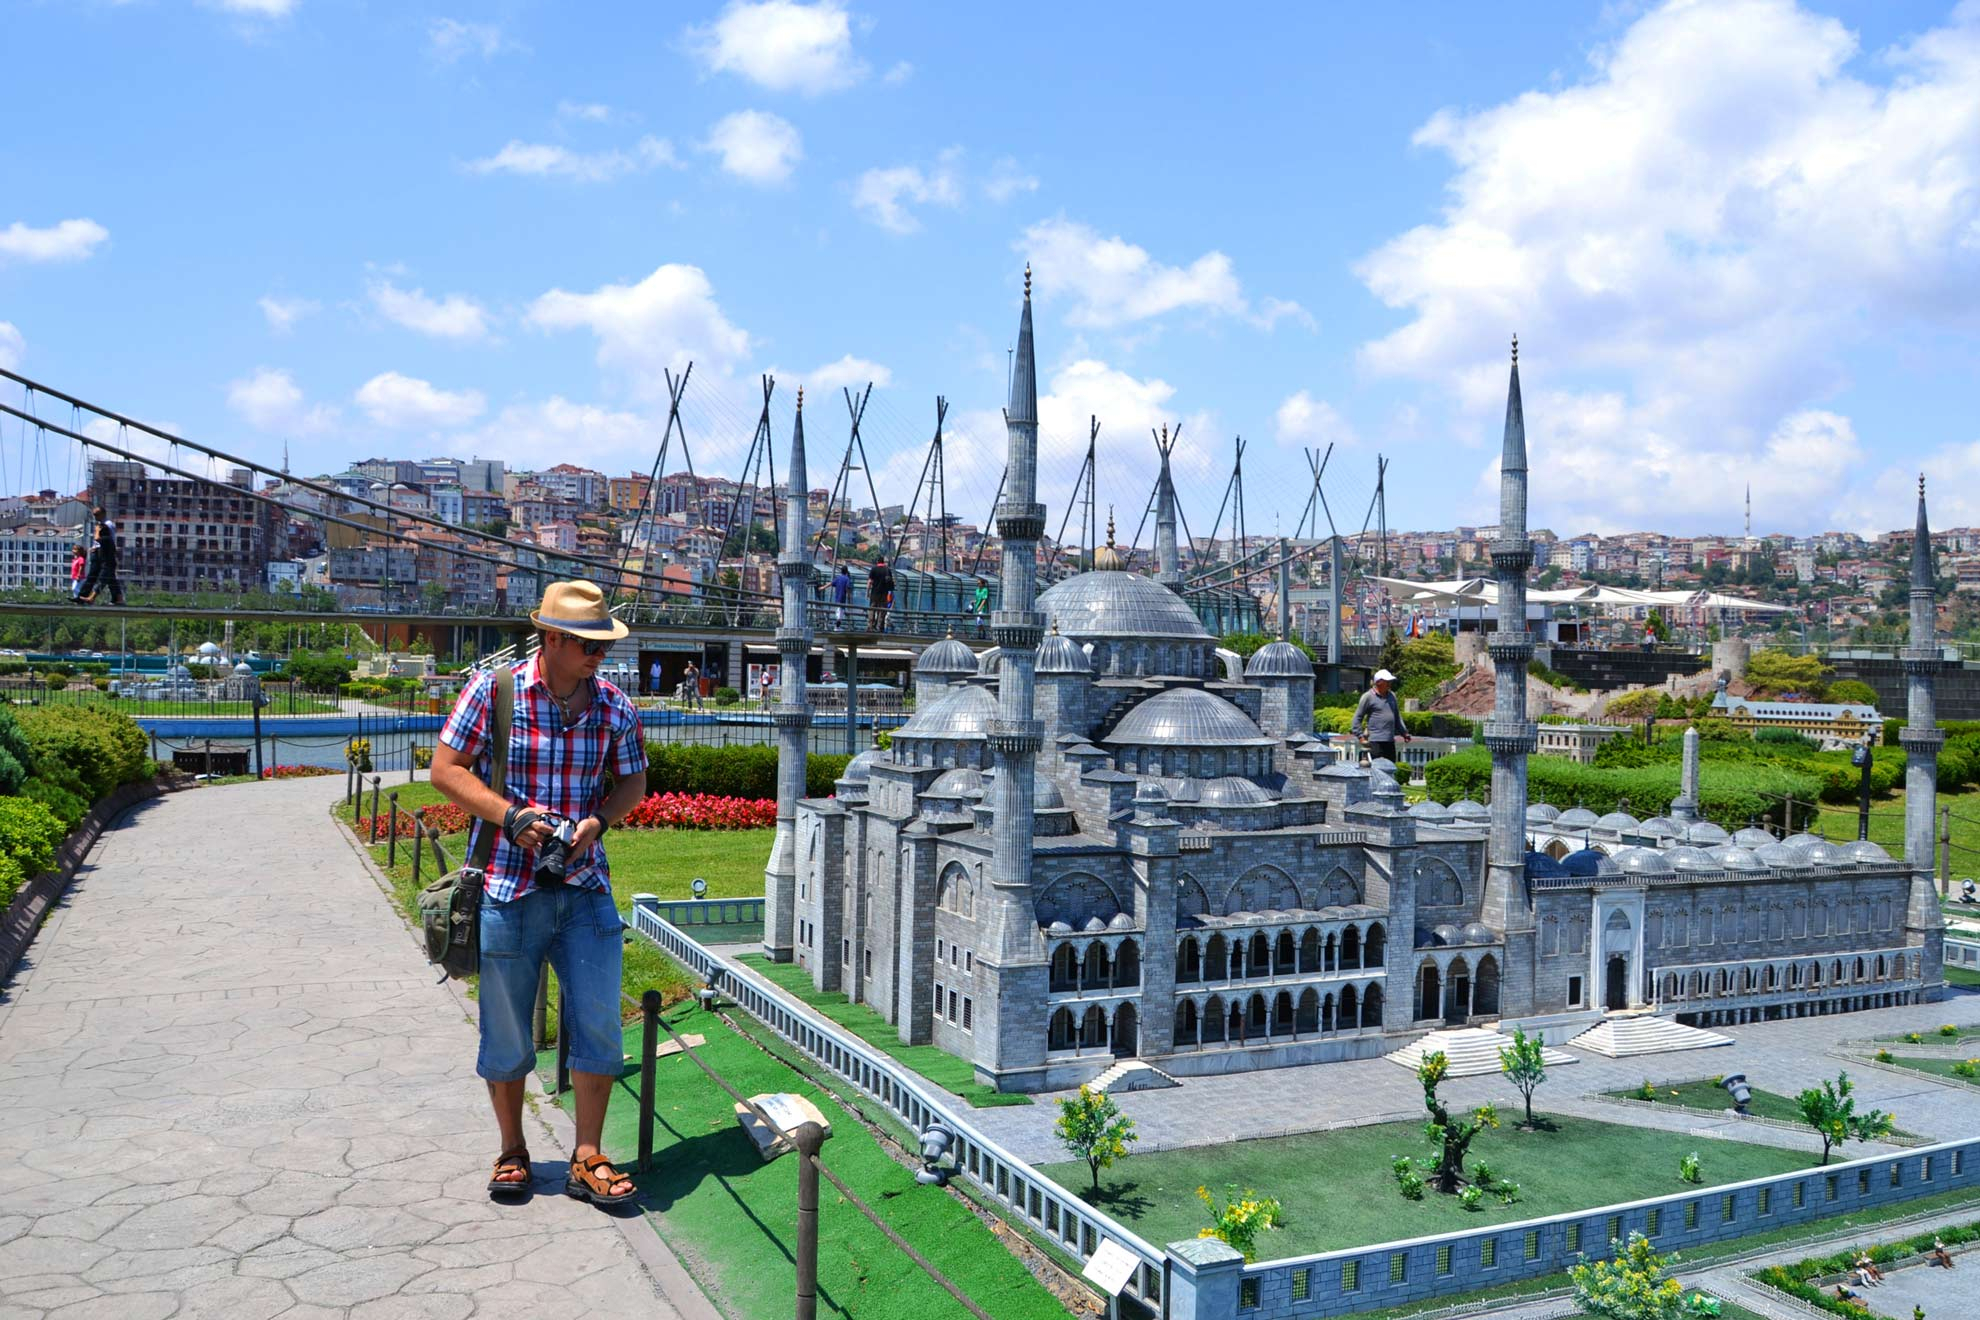 Miniaturk: A Captivating Journey Through Turkey's Rich Heritage